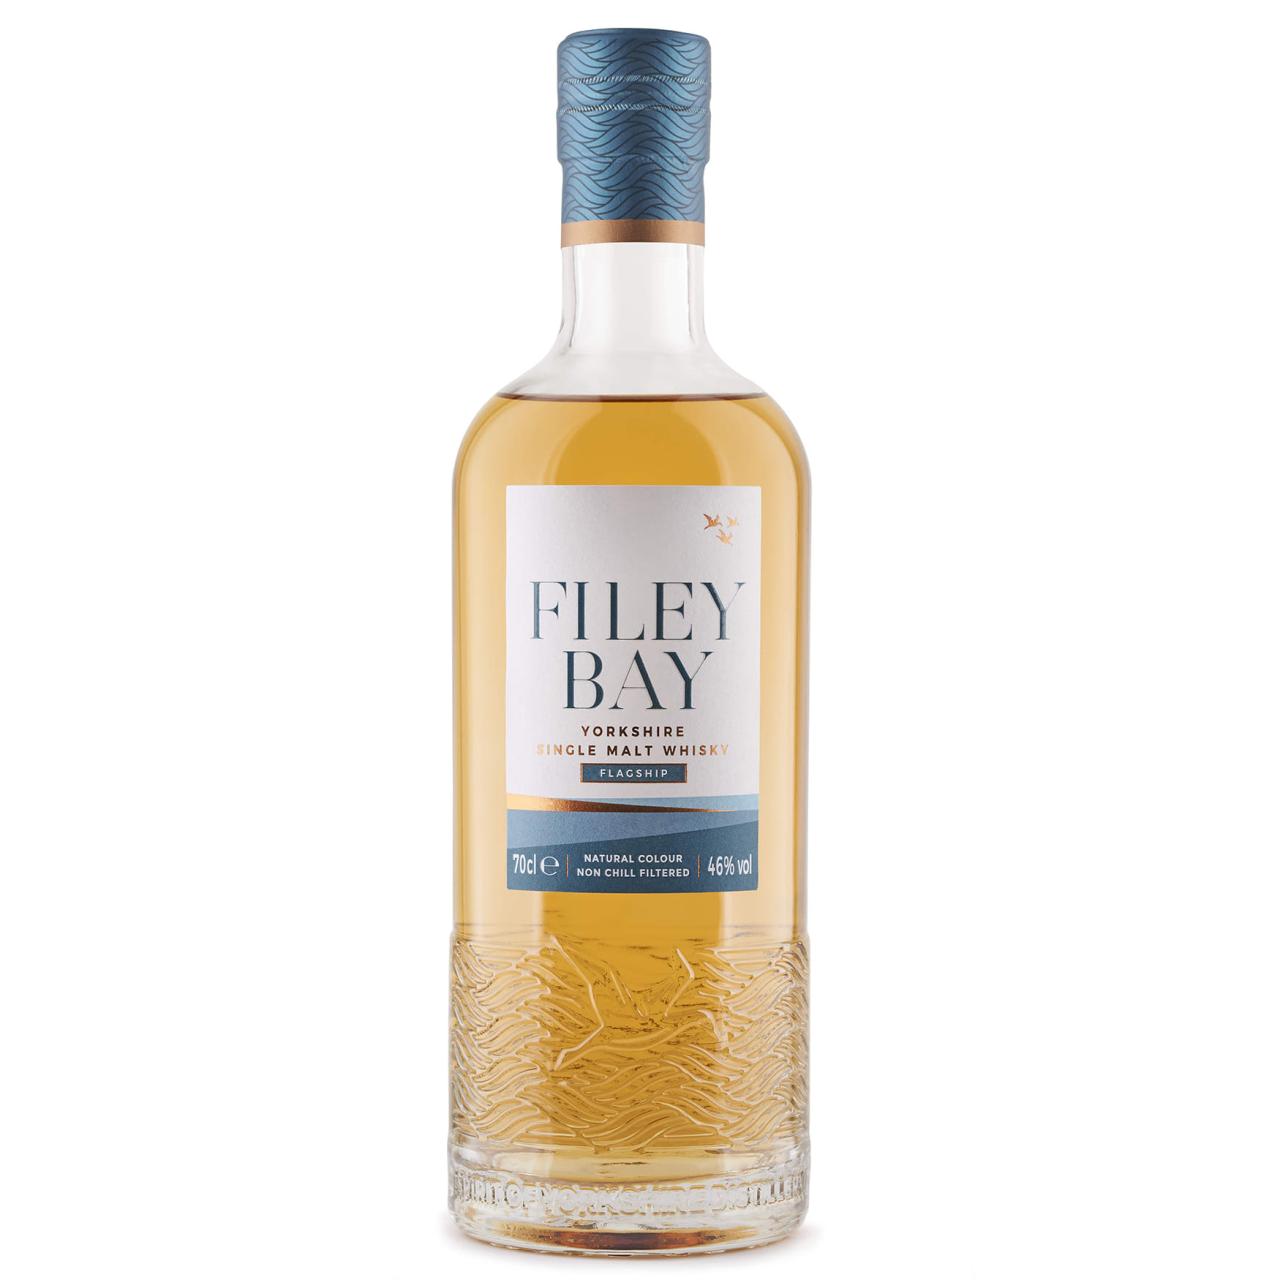 Filey Bay Single Malt Whisky Flagship 46% 0,7l